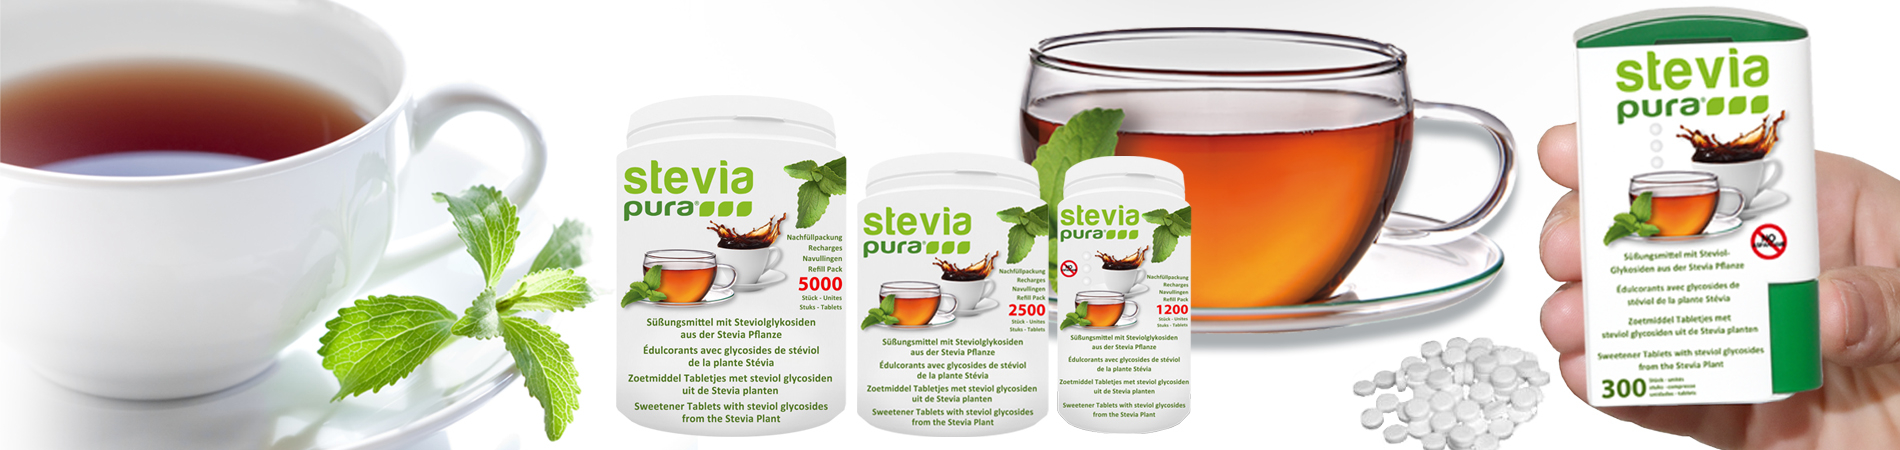 Comprar Stevia em Comprimidos Adoçante Recarga |...